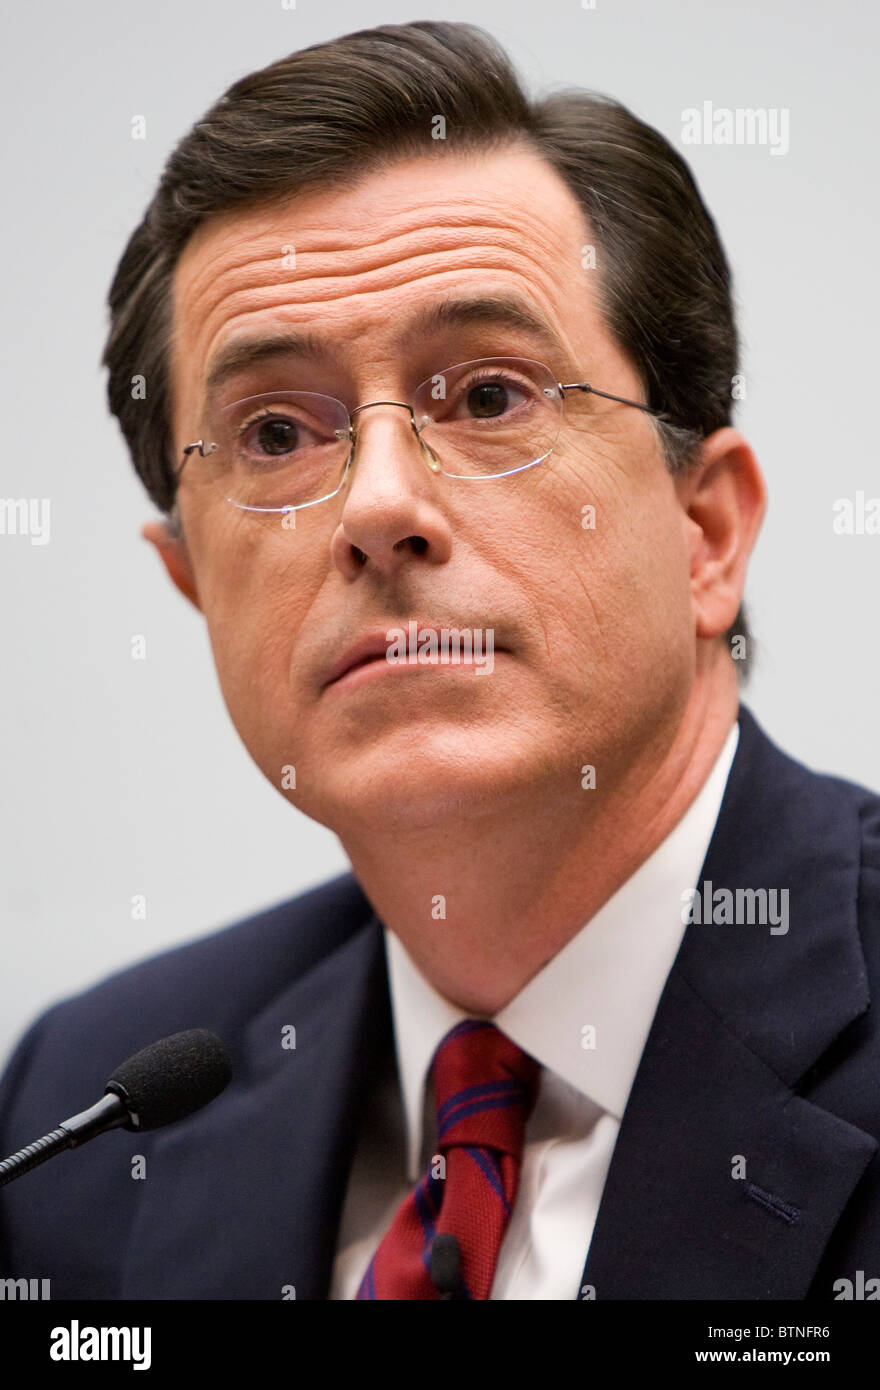 Schauspieler und Komiker Stephen Colbert bezeugt vor dem Kongress. Stockfoto